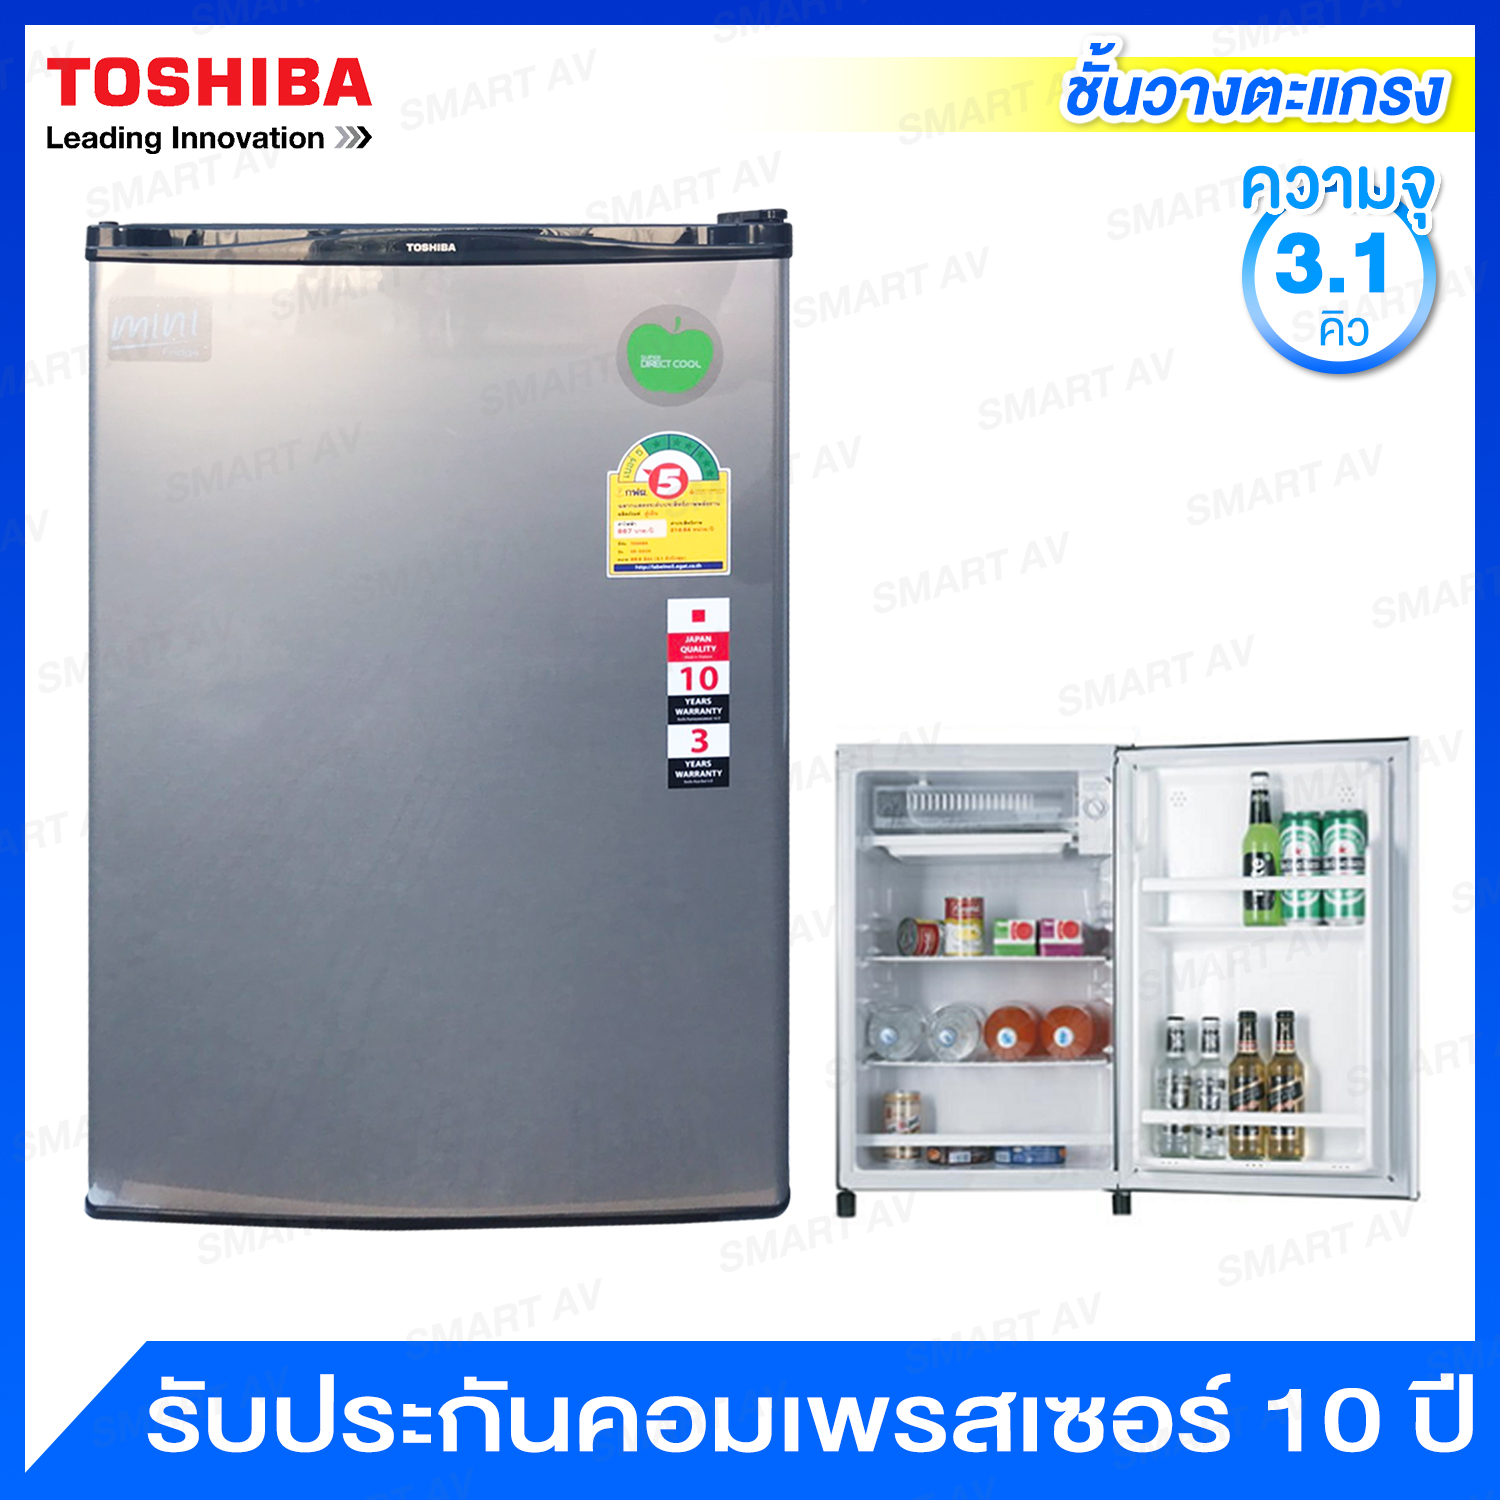 Toshiba ตู้เย็นมินิบาร์ 1 ประตู ความจุ 3.1 คิว รุ่น GR-D906-SH (สีเงิน)